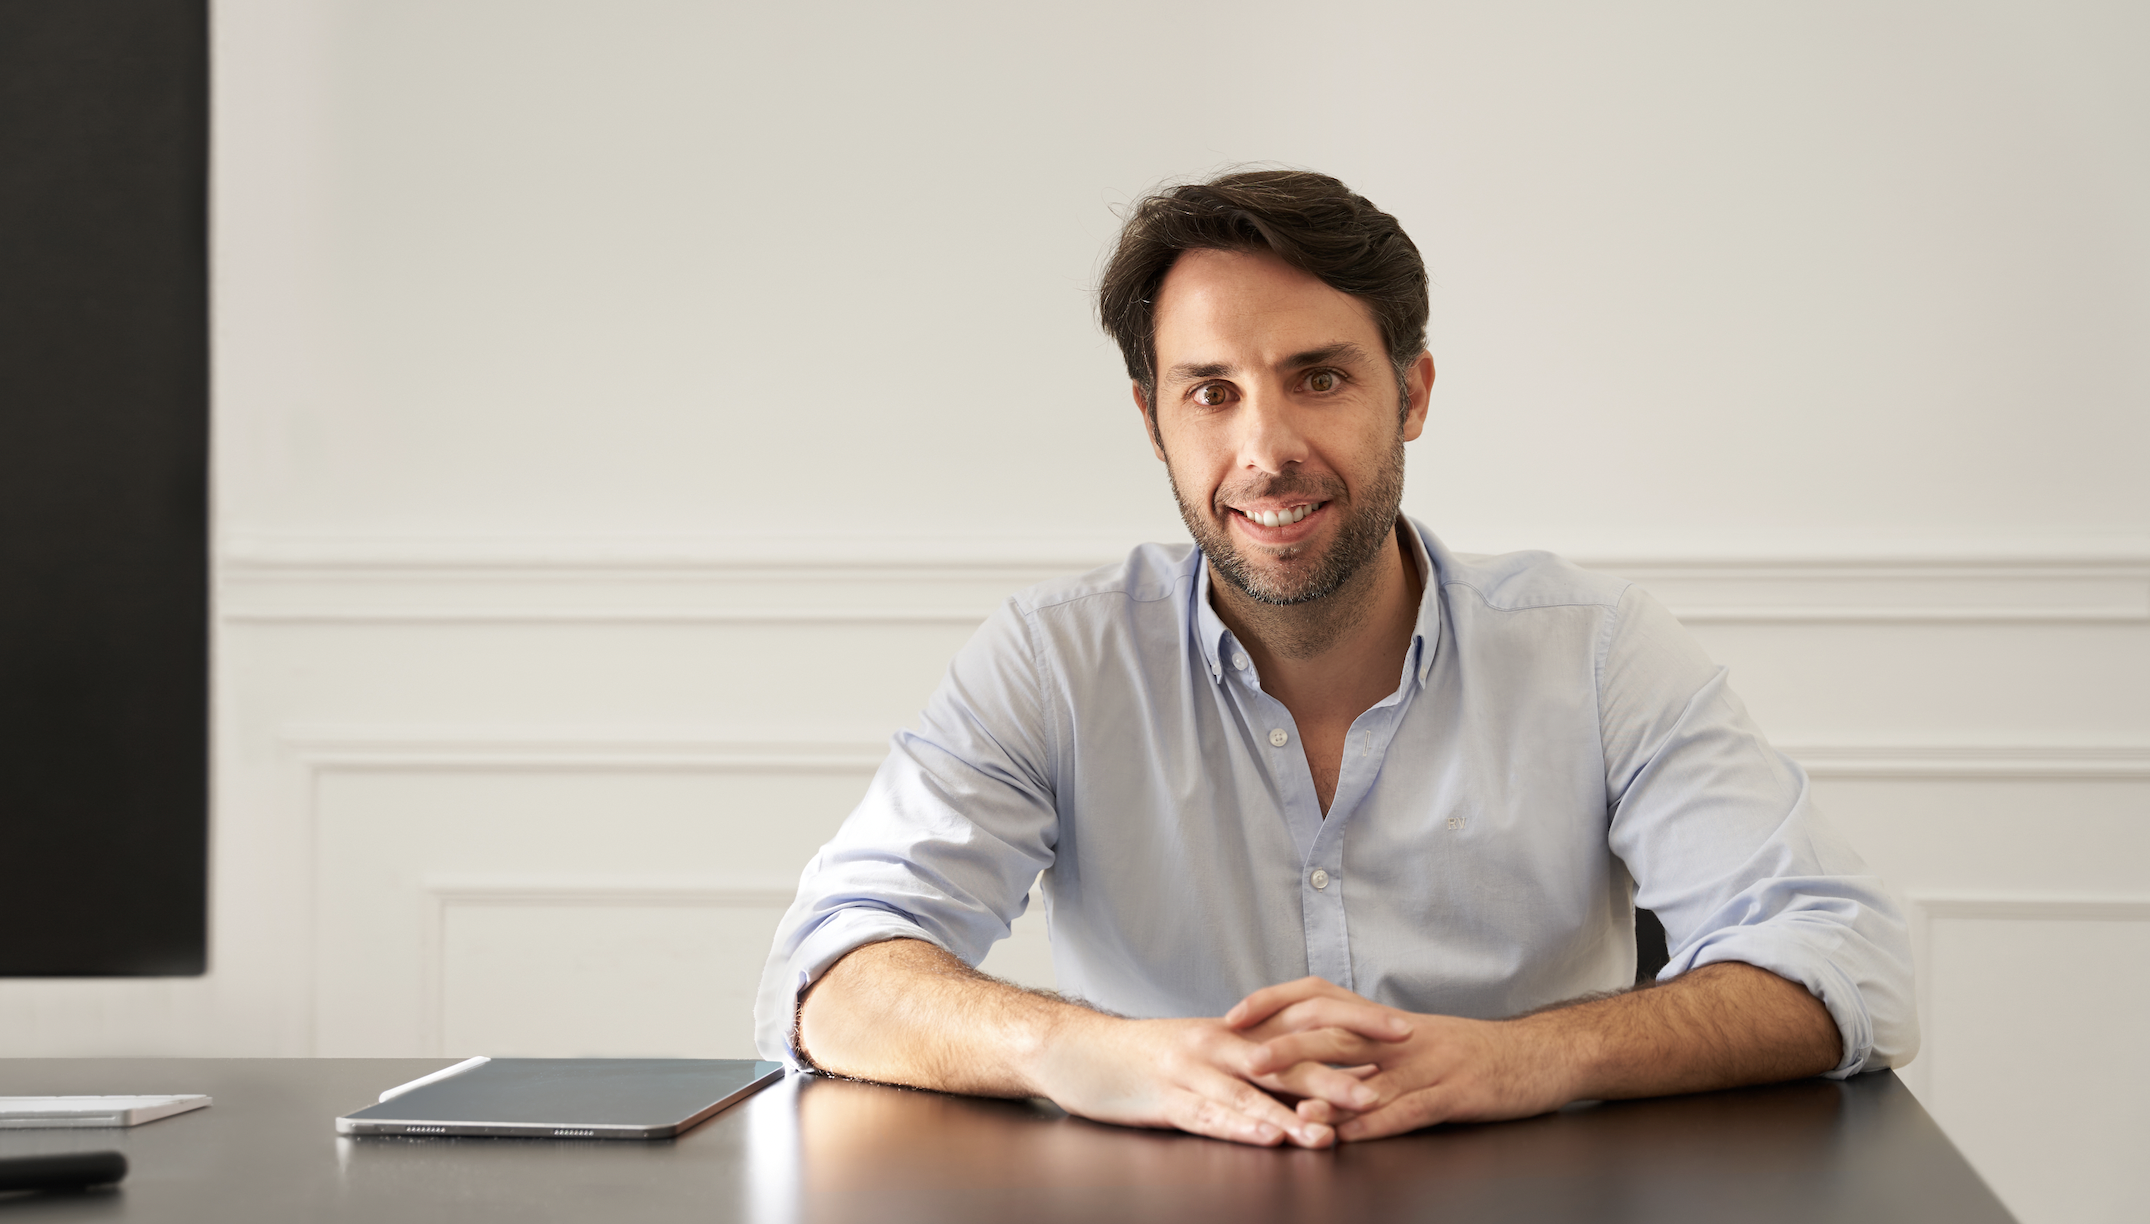 An image of ODILO founder, Rodrigo Rodríguez, sitting at a desk